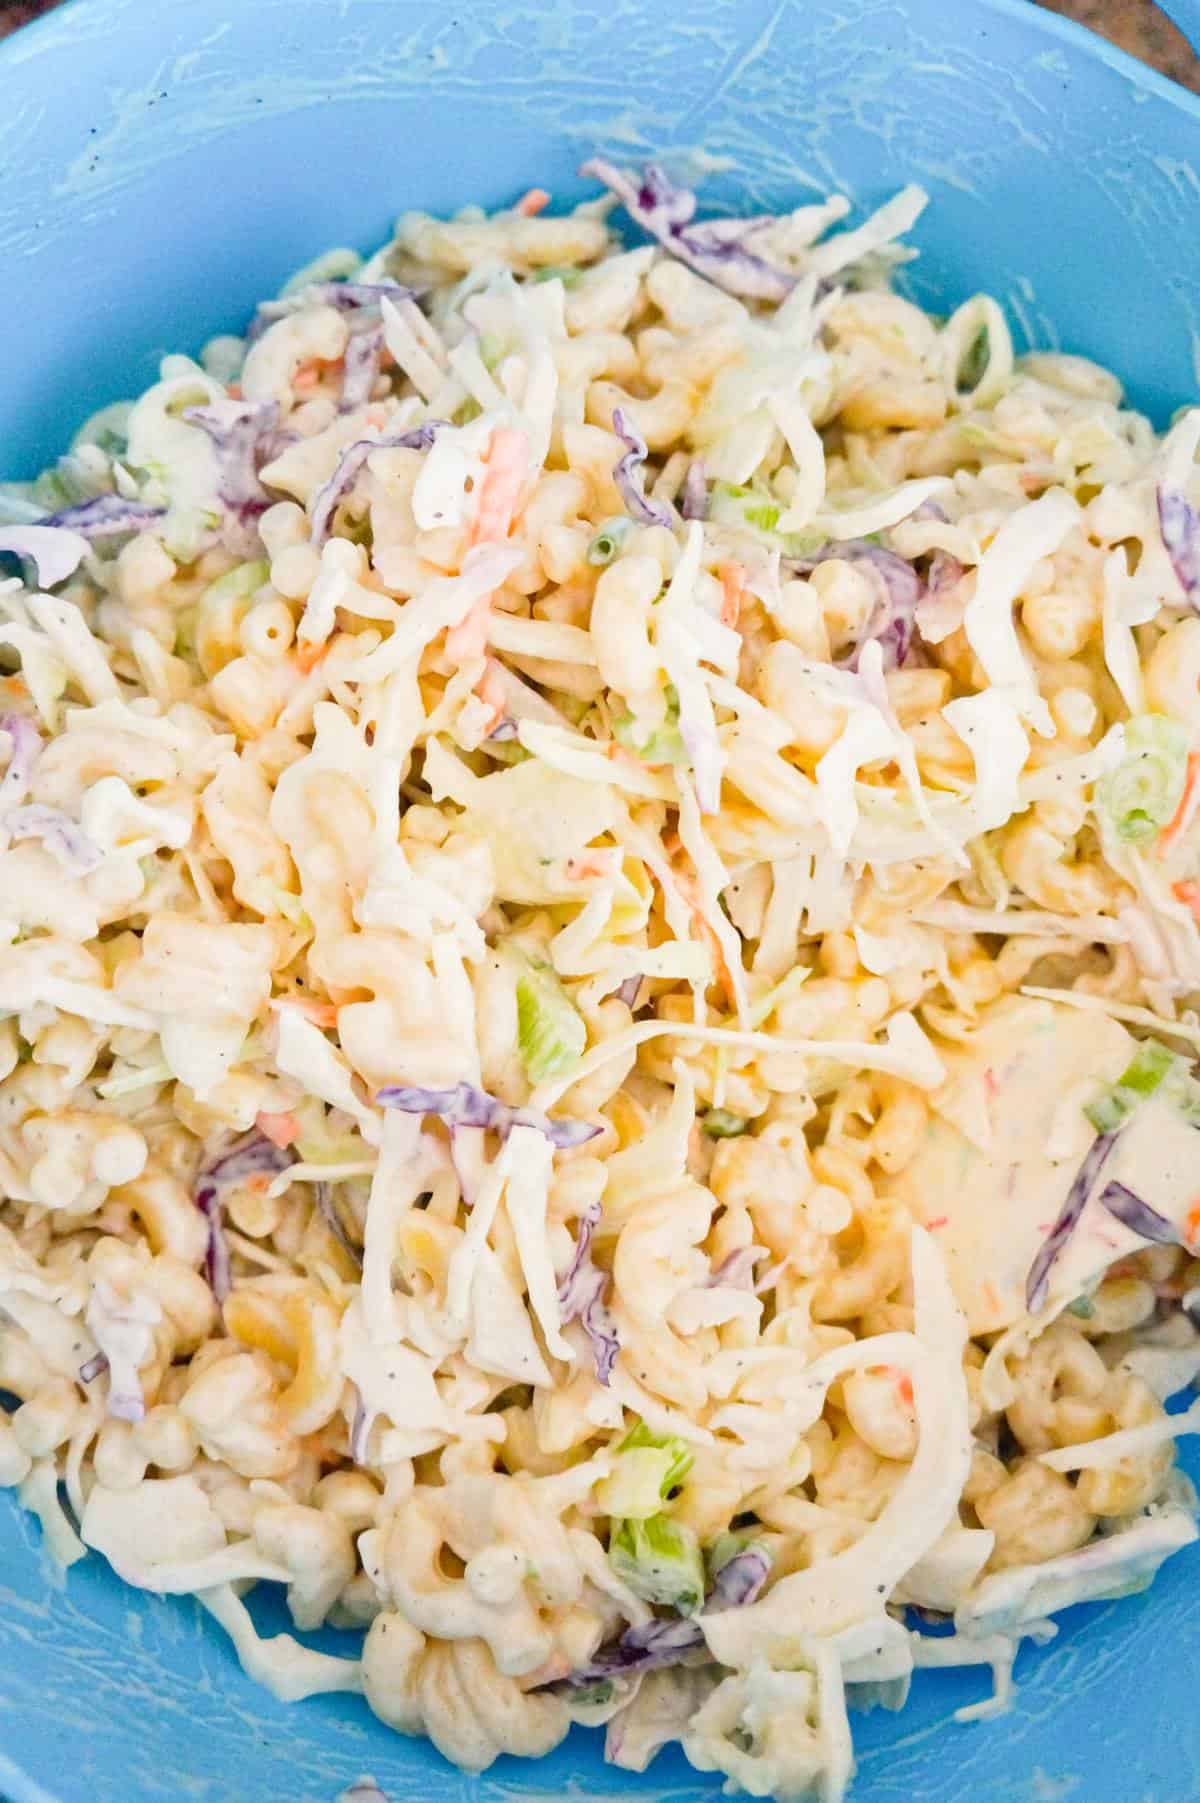 coleslaw macaroni salad mixture in a bowl